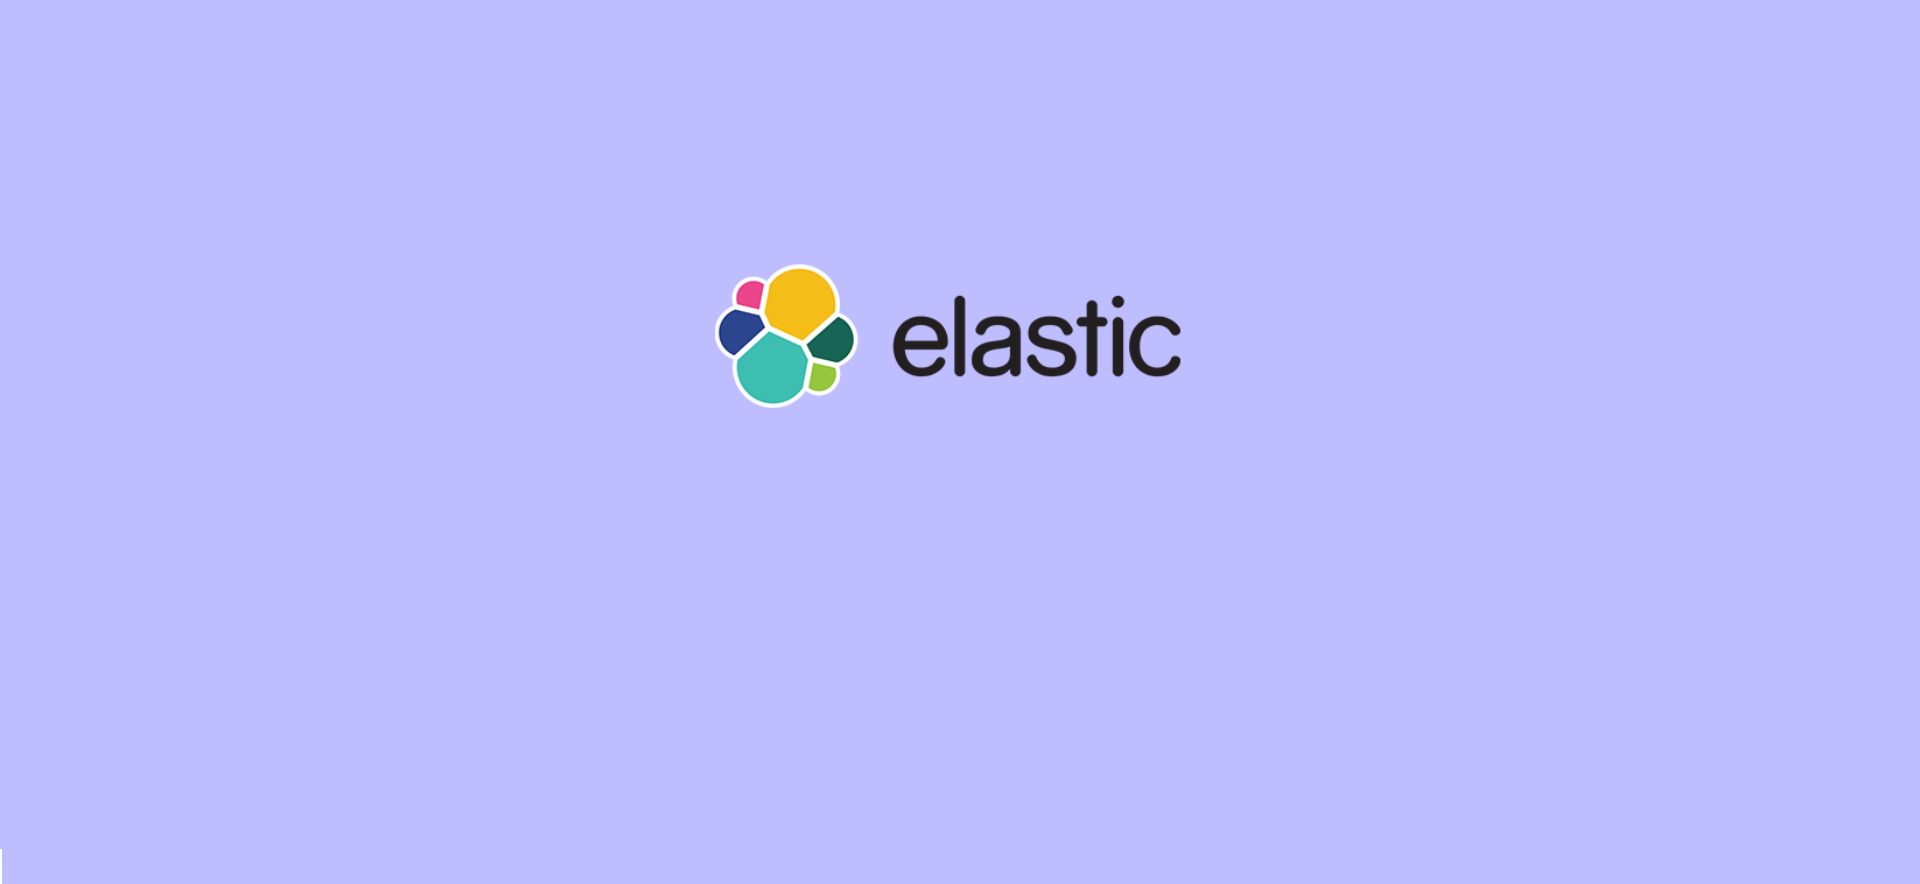 elasticsearch image